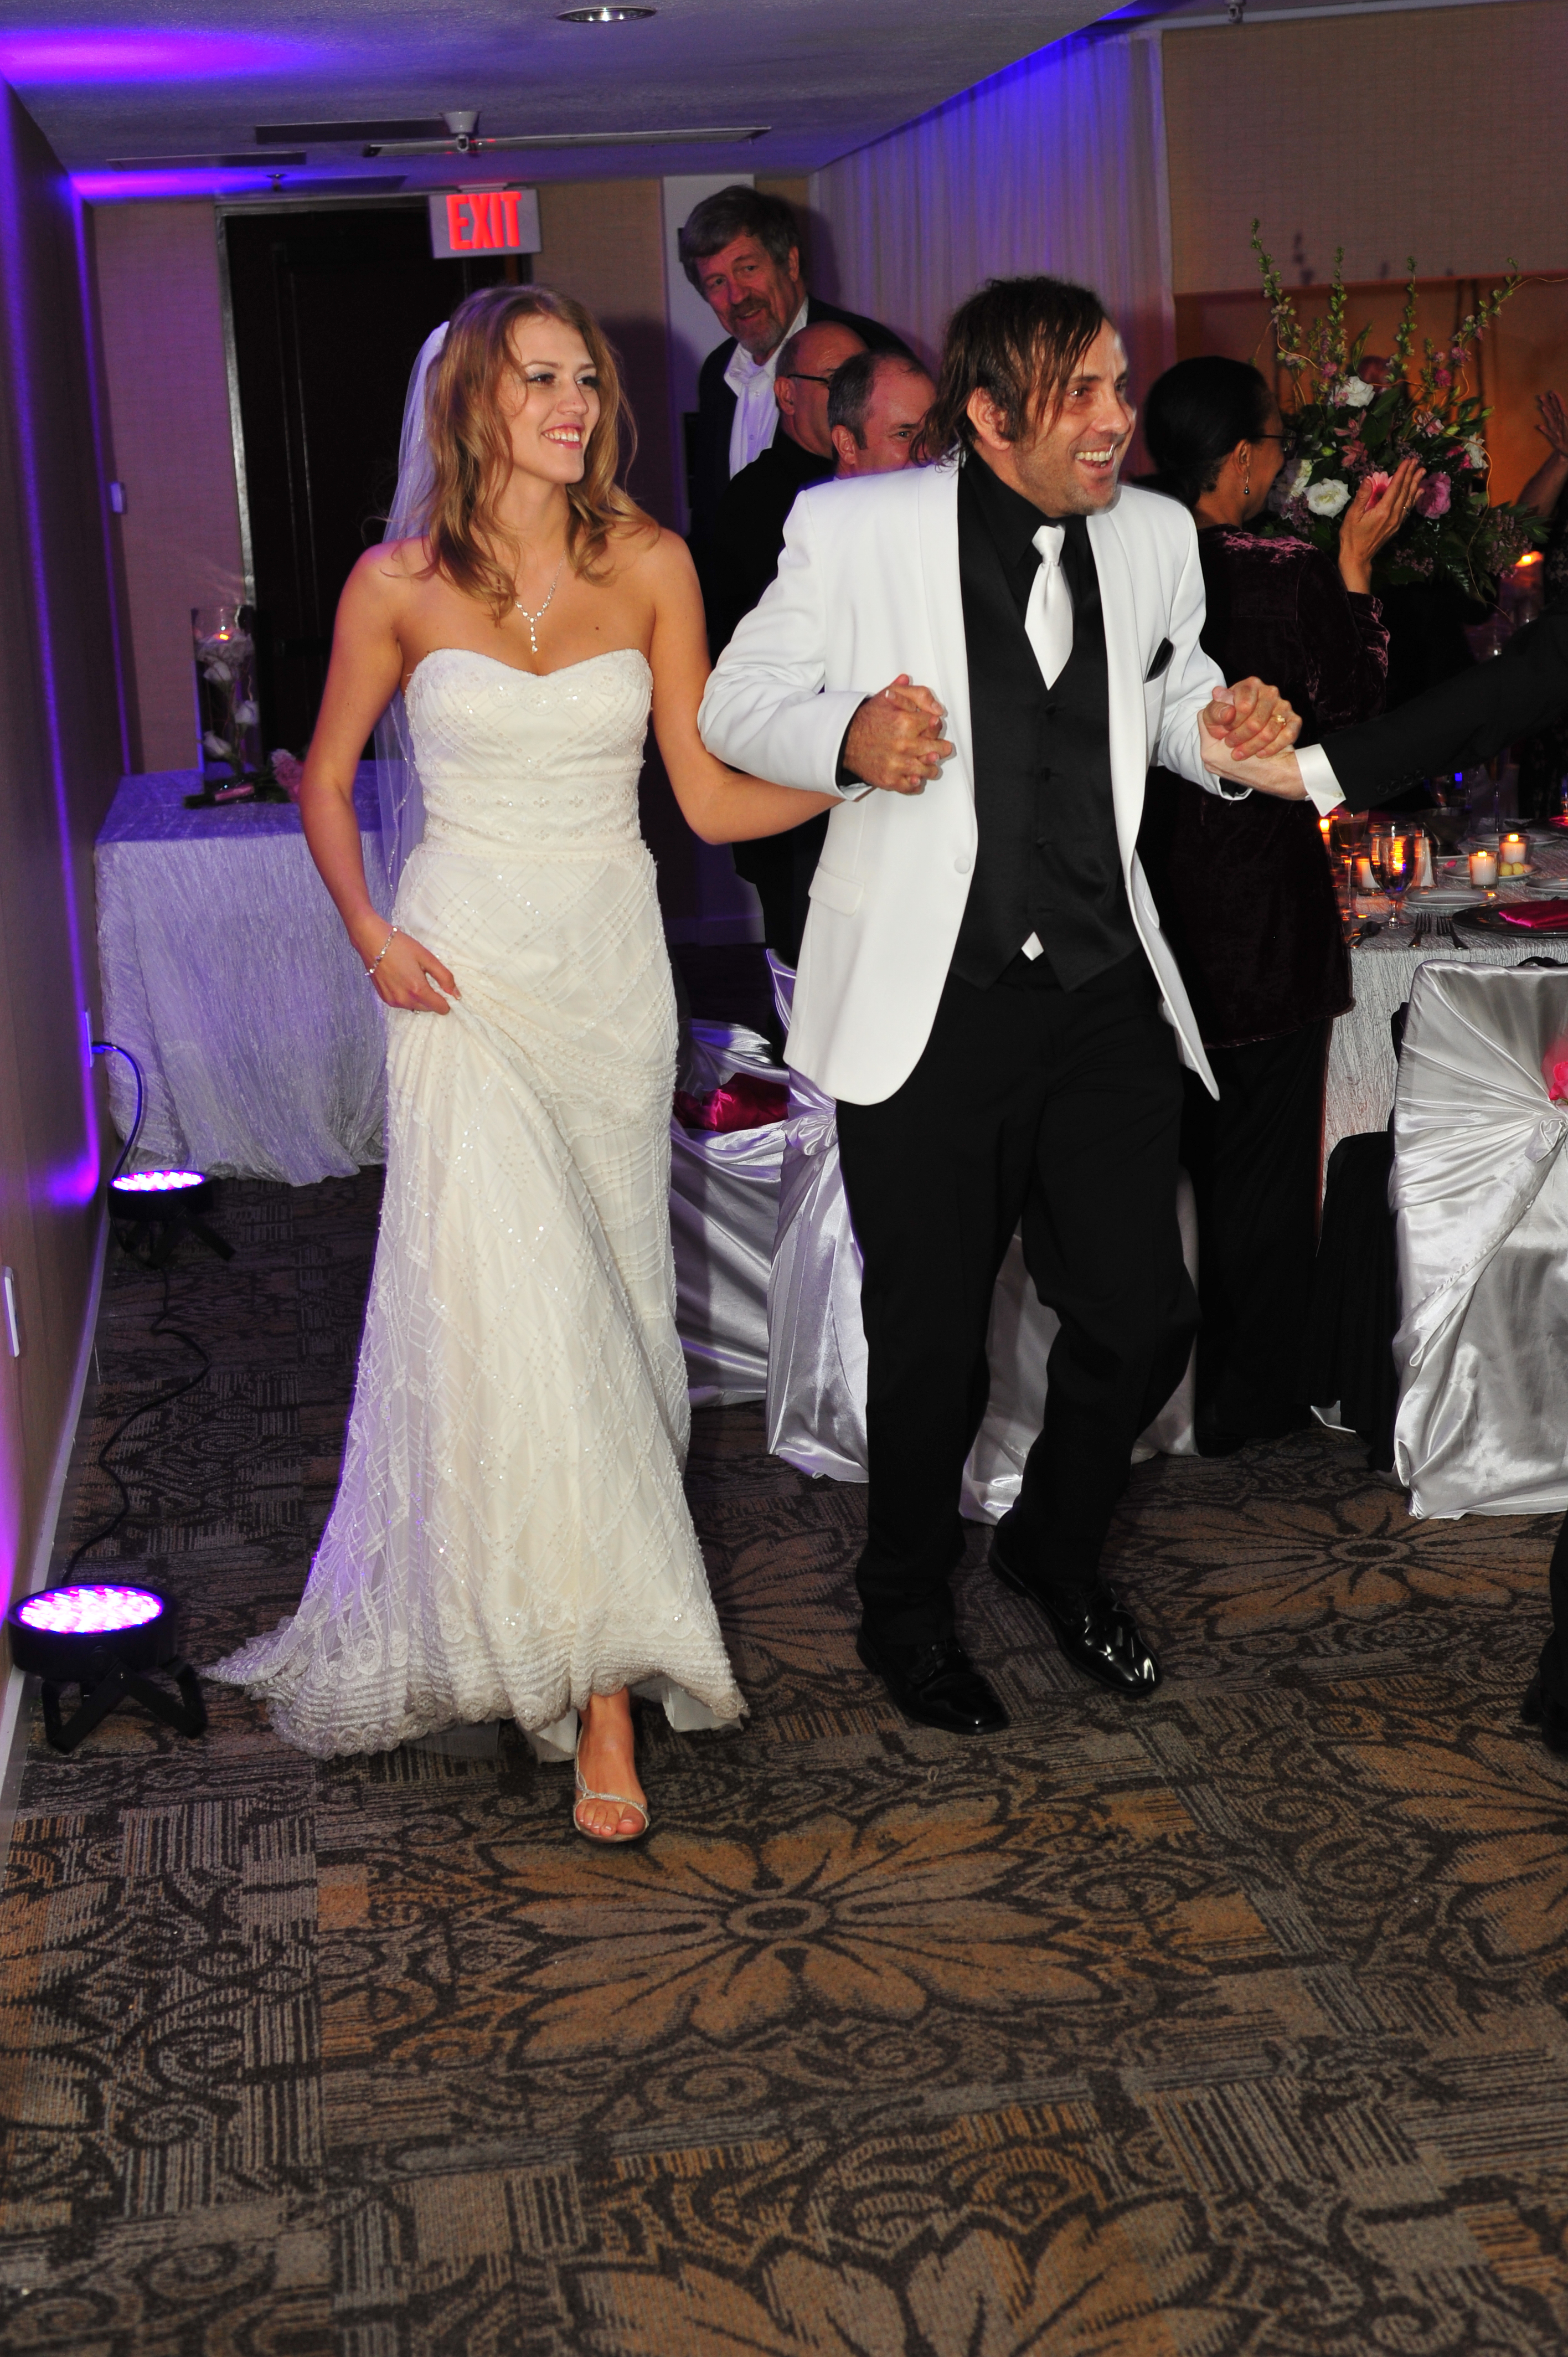 Brad Heller with his wife Svetlana Heller at their wedding